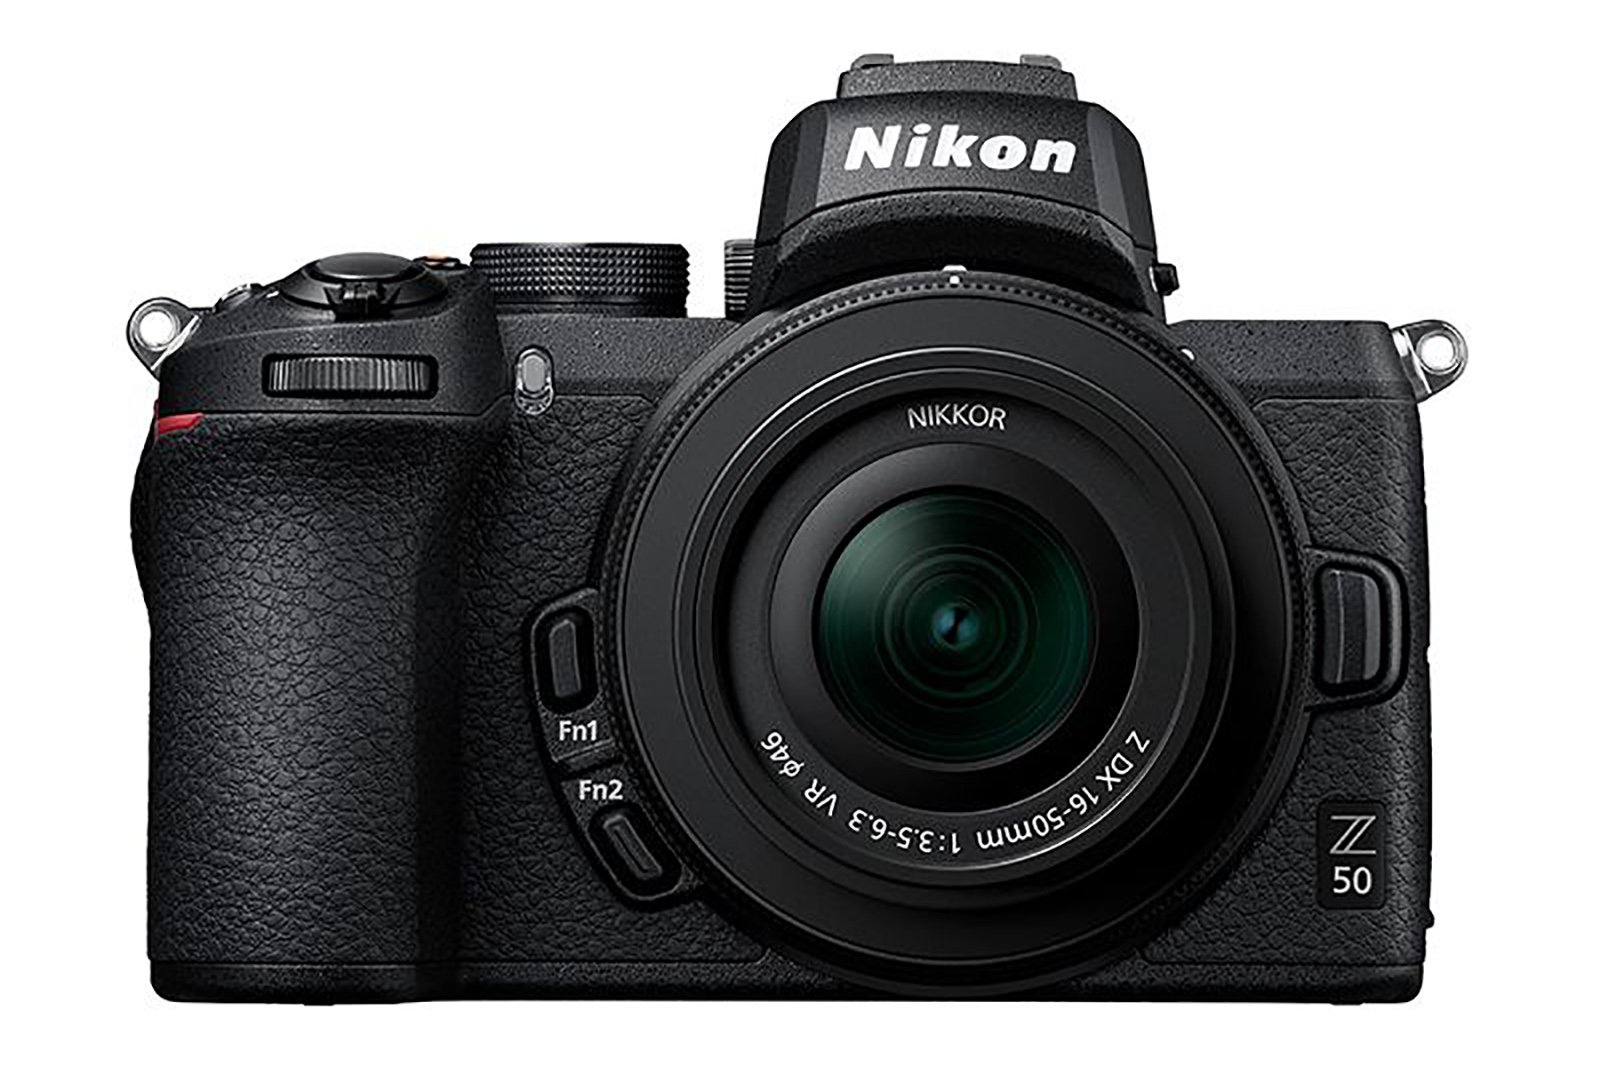 Nikon Z50 Product Photos Leaked: This is Nikon's First APS-C Mirrorless